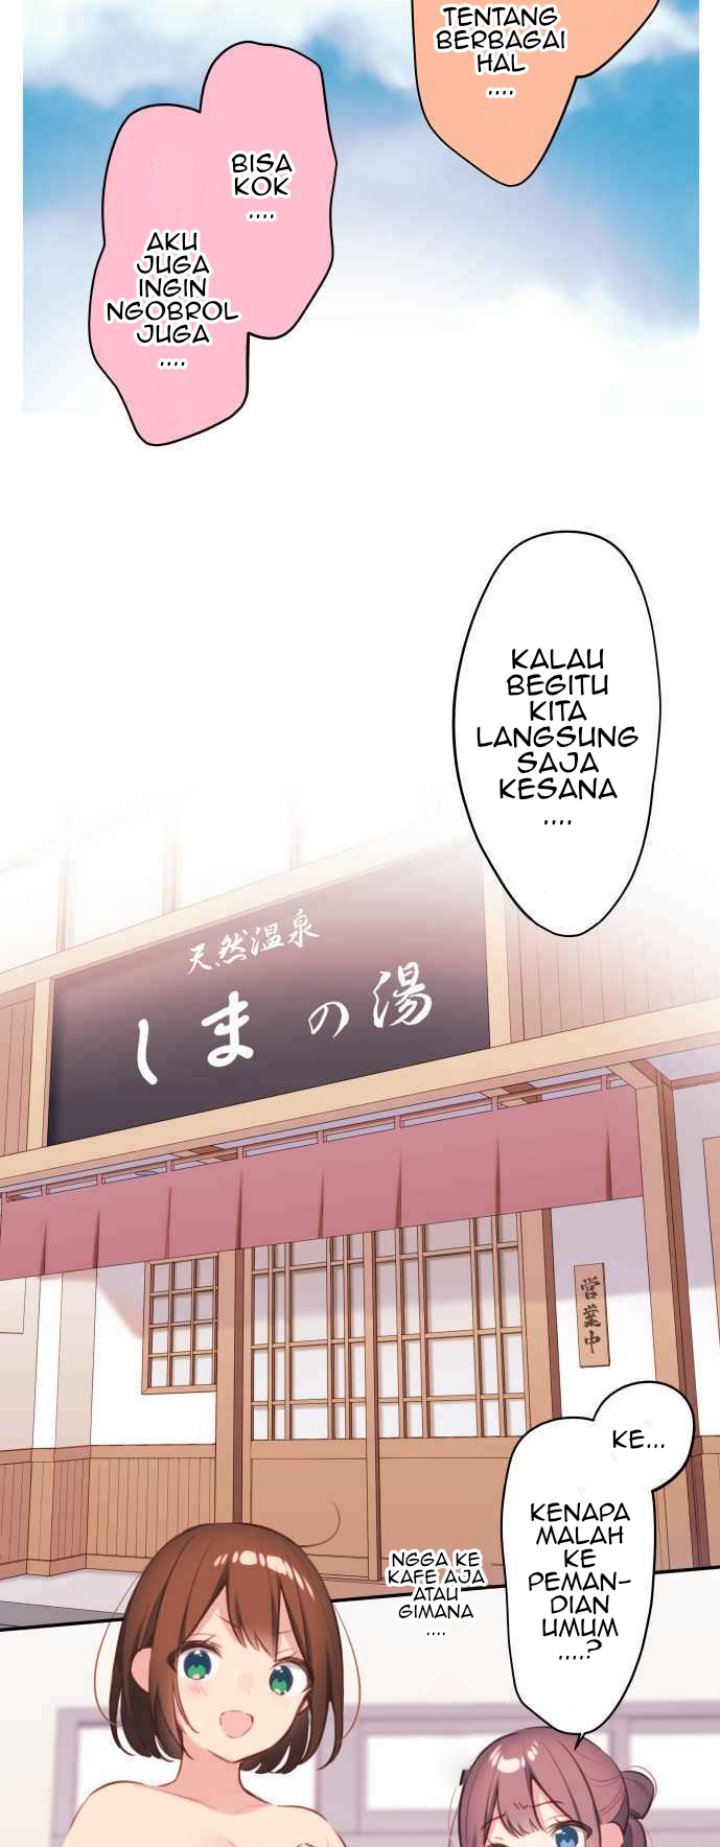 Waka-chan Is Flirty Again Chapter 74